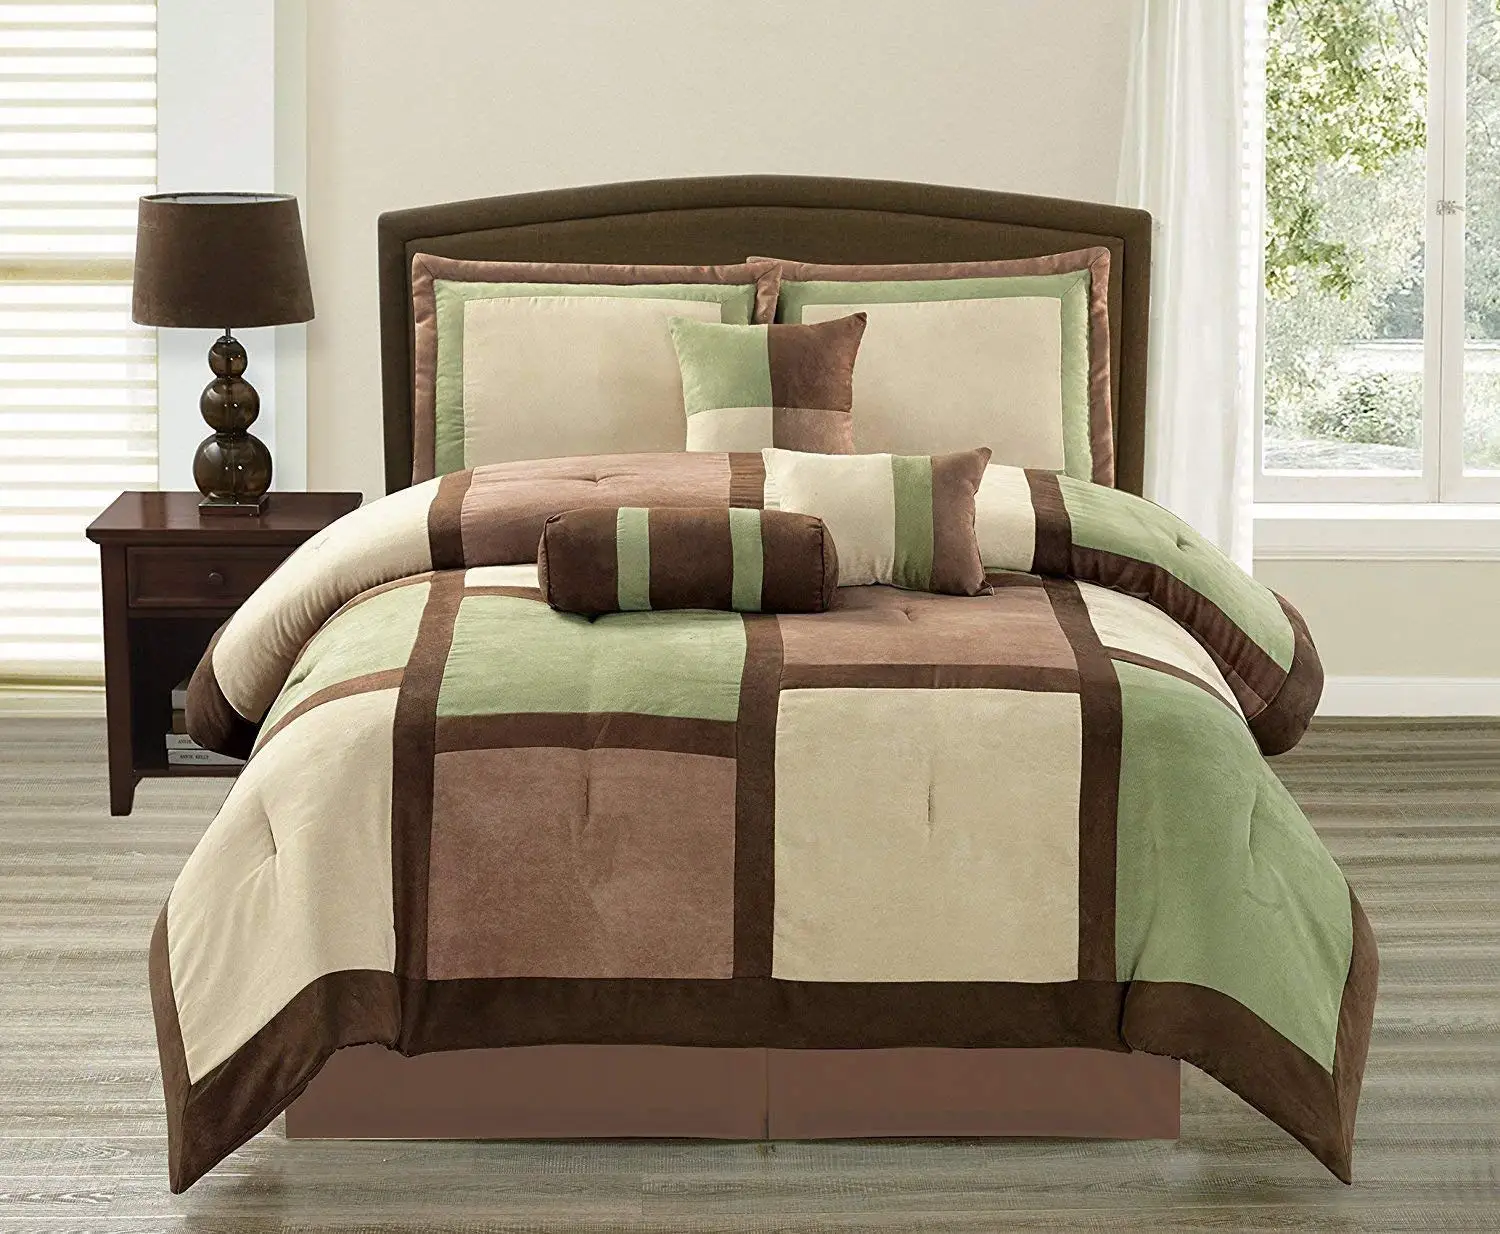 Cheap California King Comforter Sale Find California King Comforter Sale Deals On Line At Alibaba Com